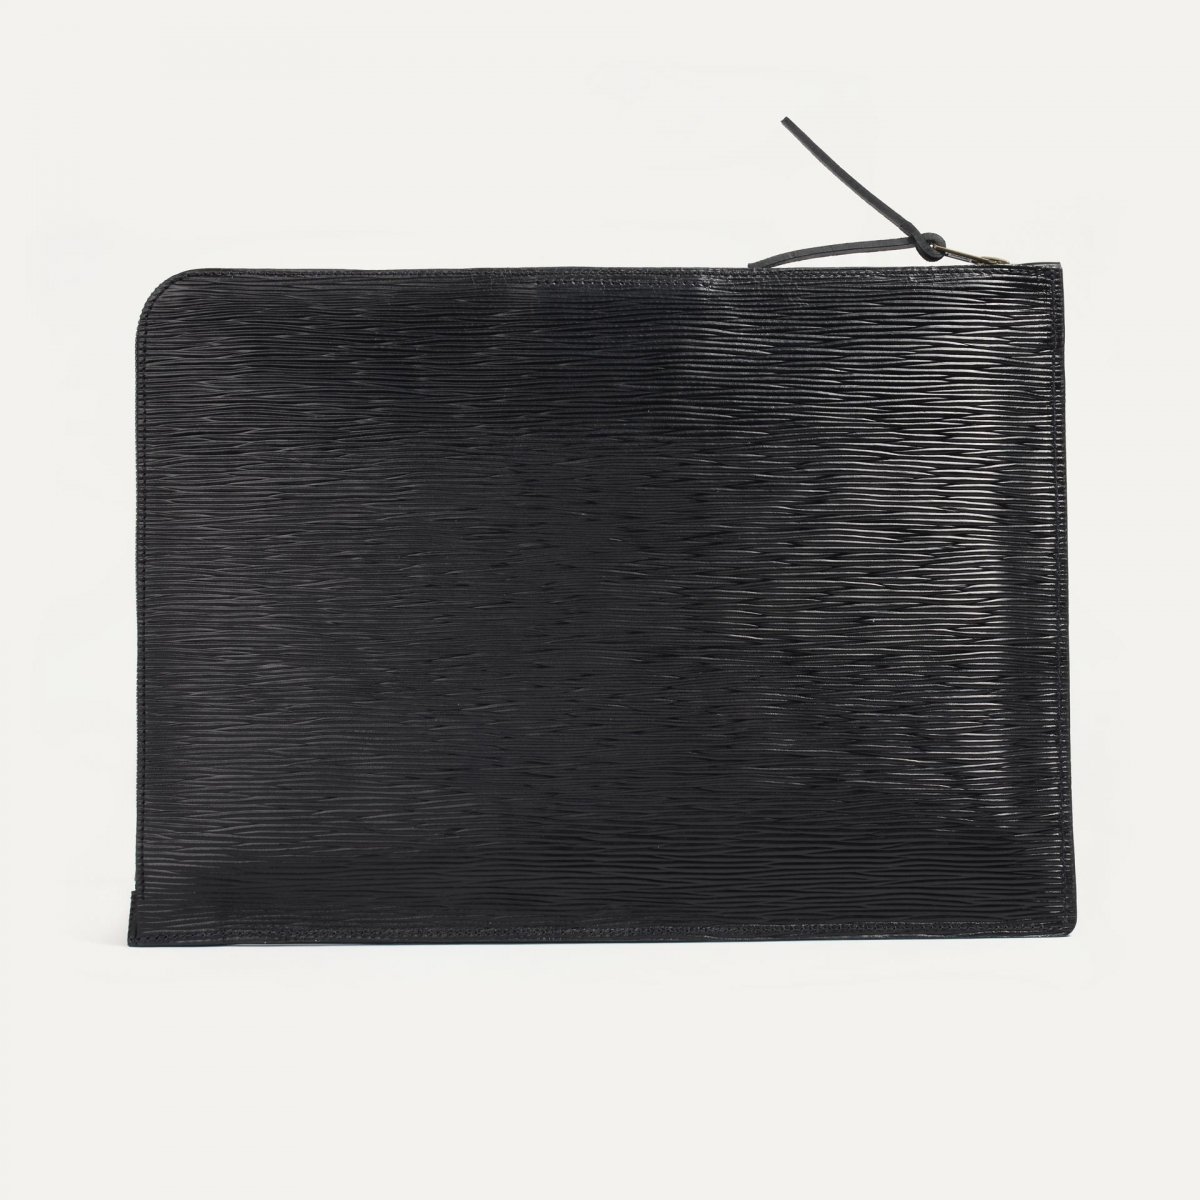 Jim Laptop sleeve 13” - black épi leather (image n°3)